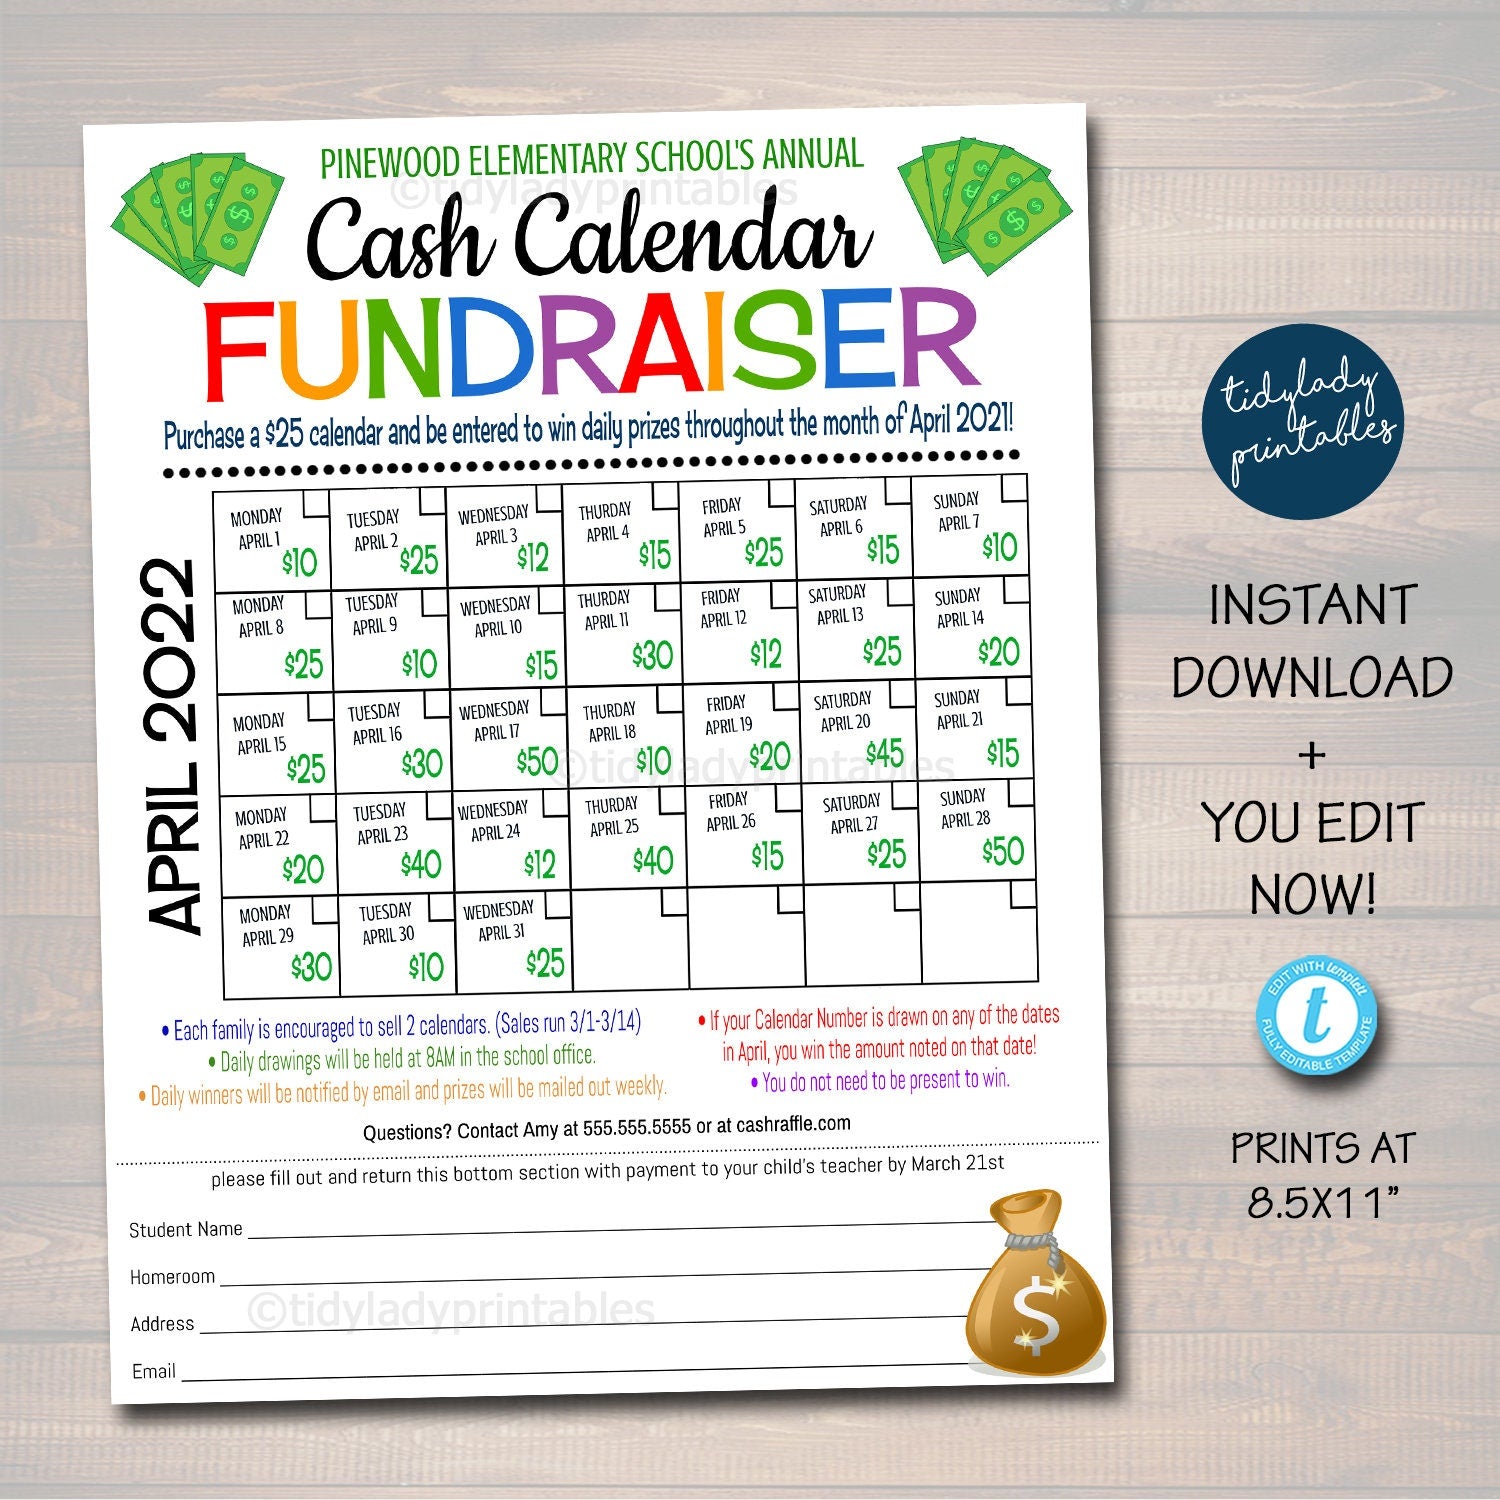 Cash Calendar Fundraiser Flyer, Printable Handout Take Home Fundraiser